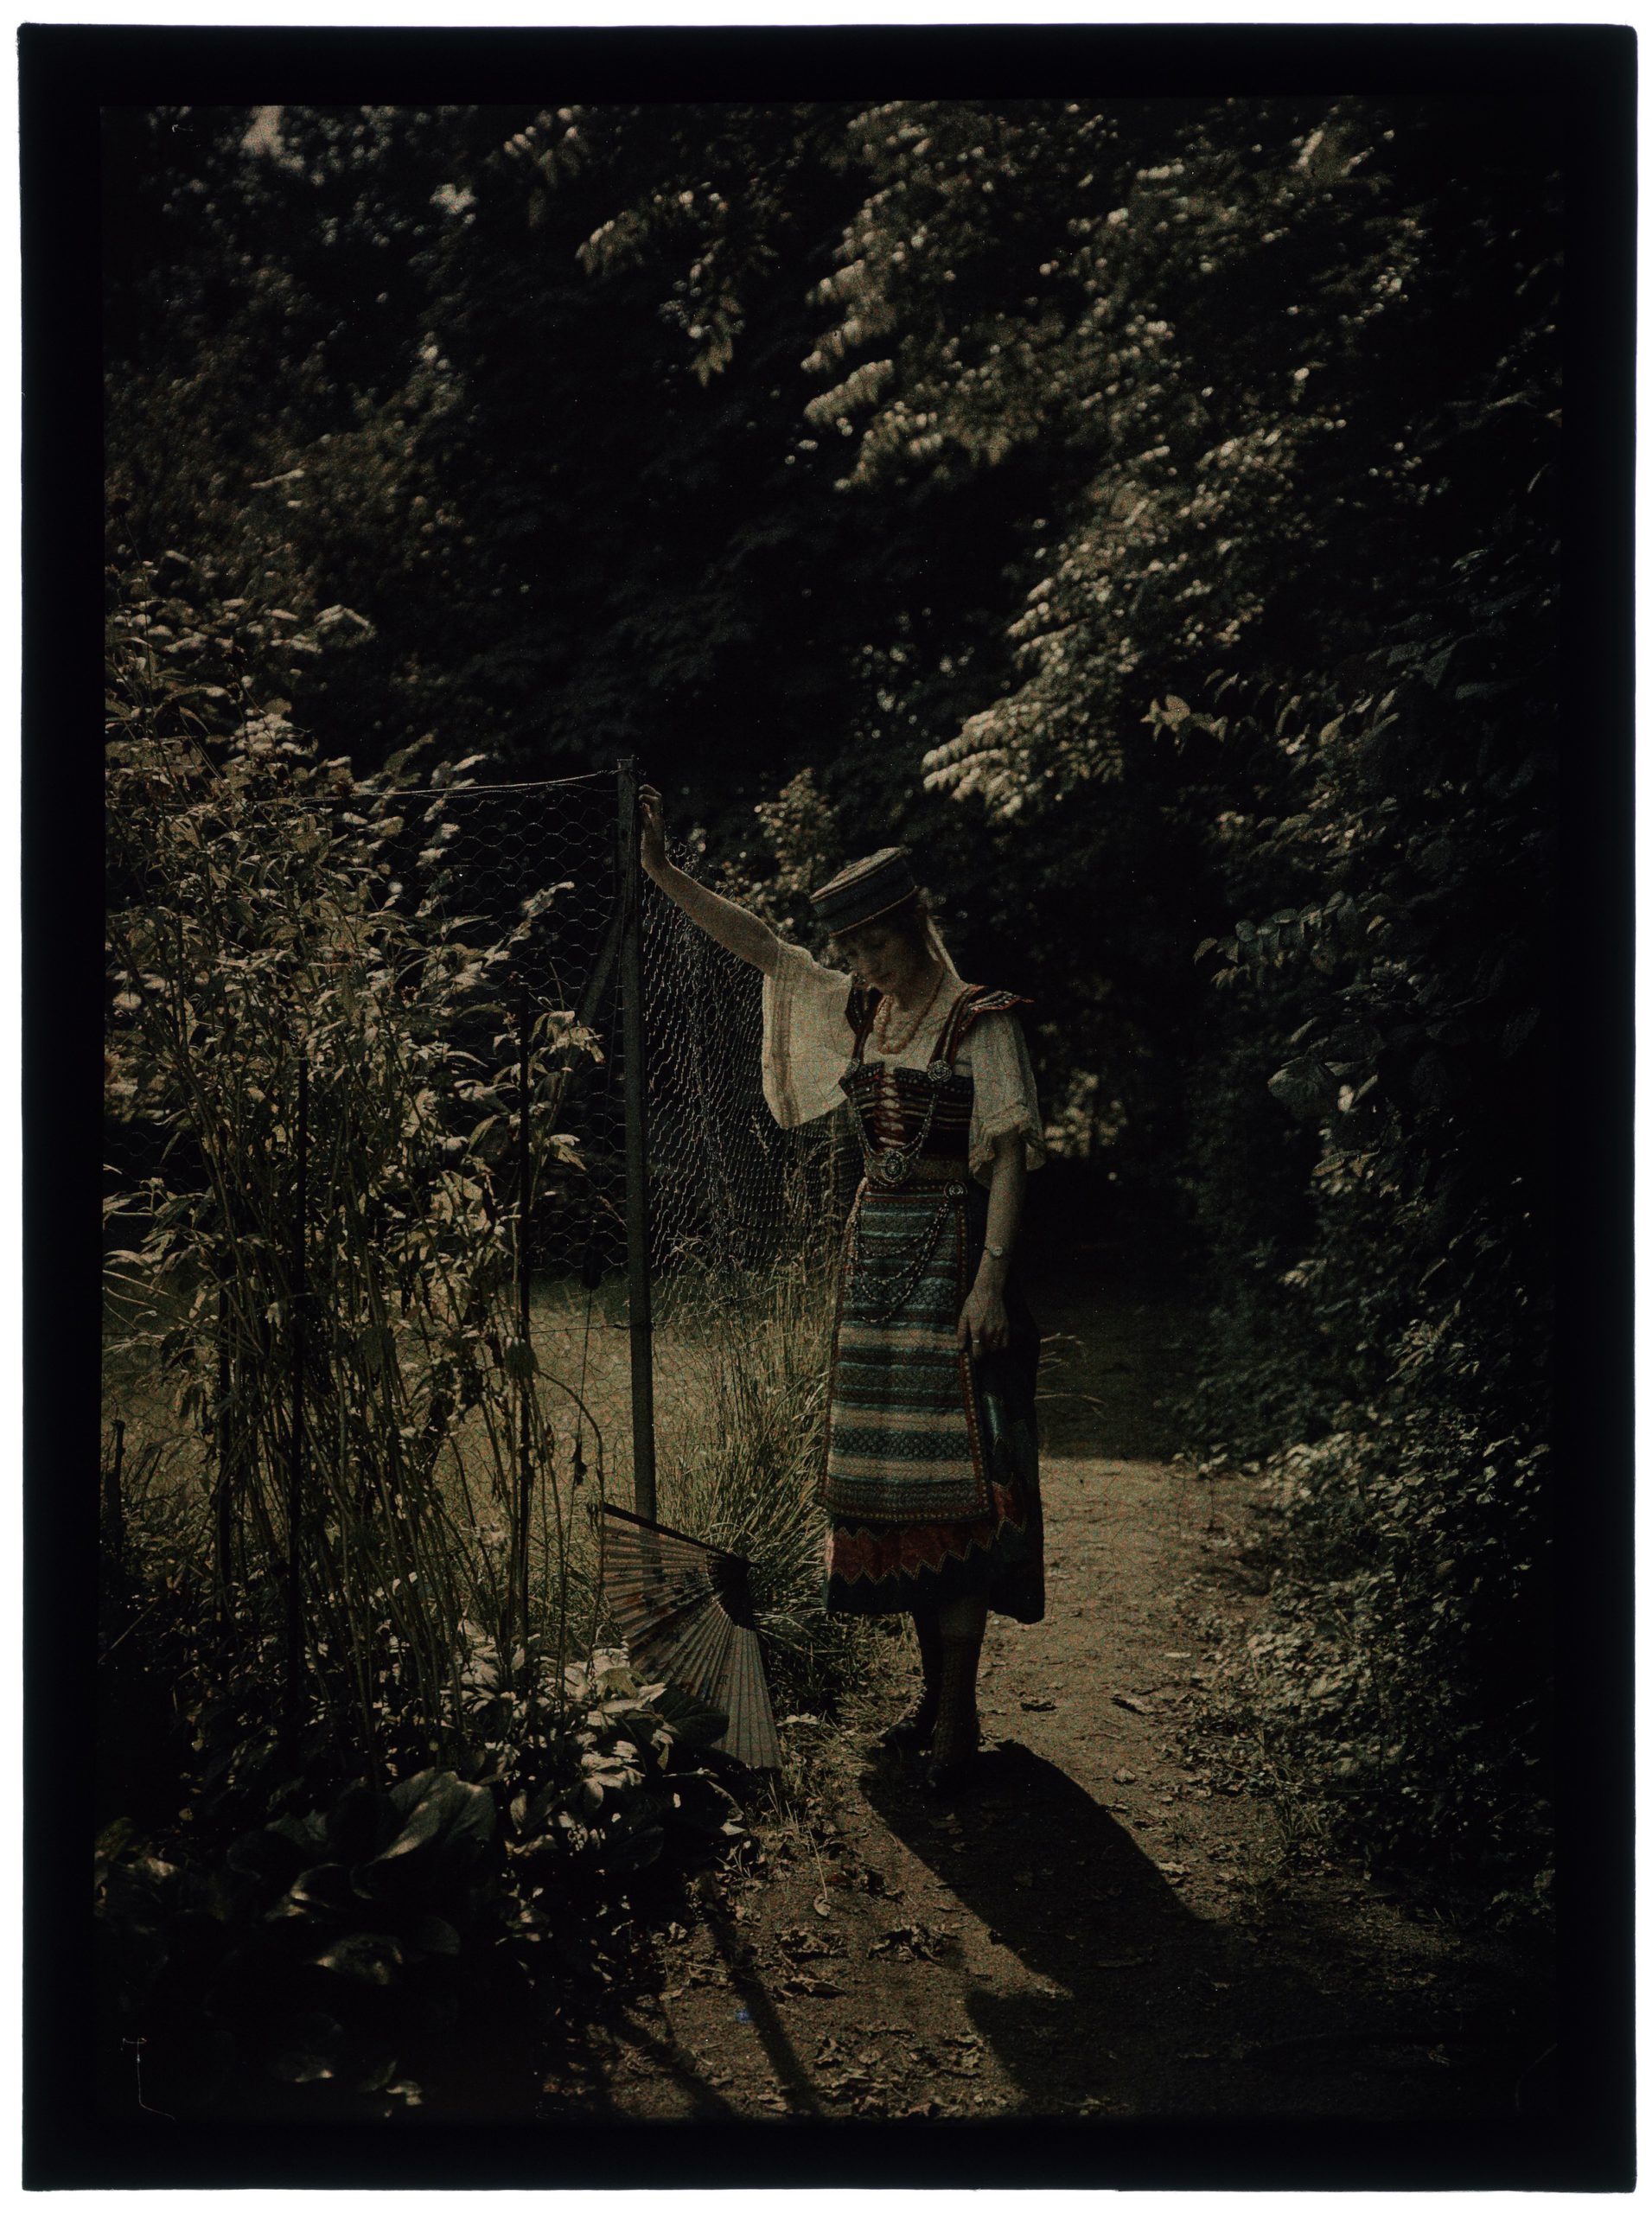 Femme en costume de hongroise au jardin